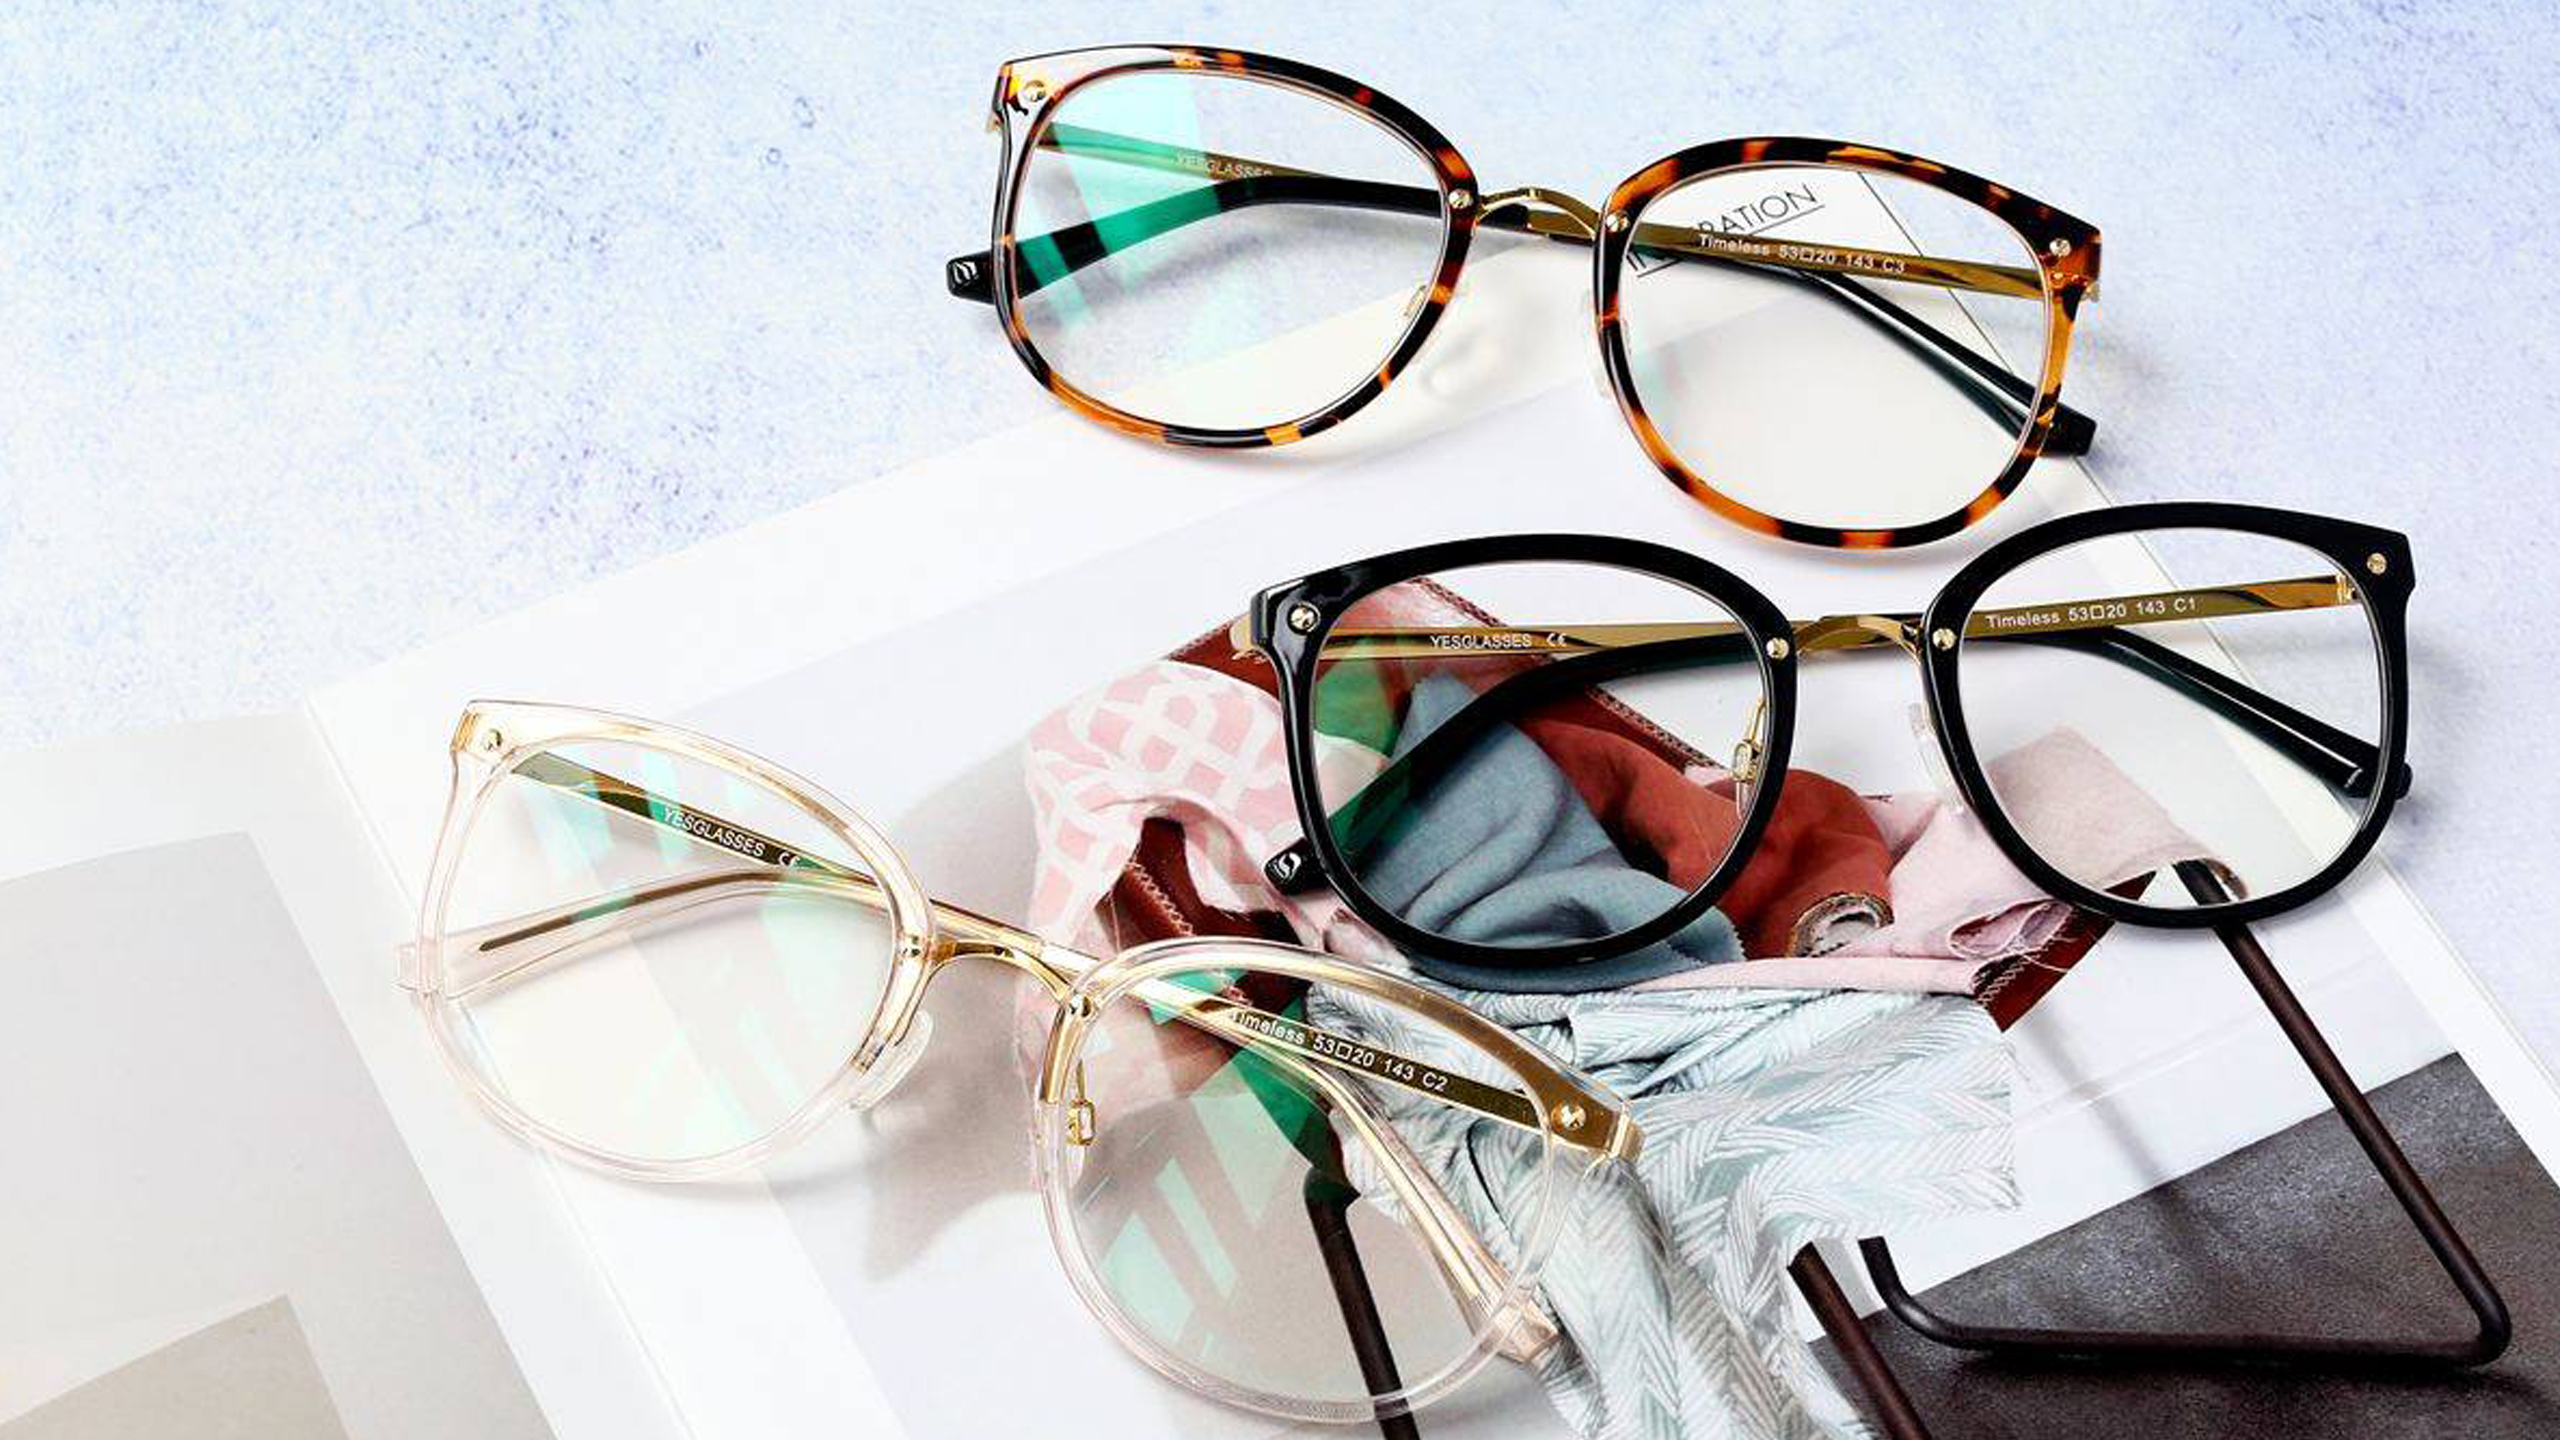 reaktion Faret vild liv YesGlasses vs. Warby Parker: Online Shopping for Glasses Compared